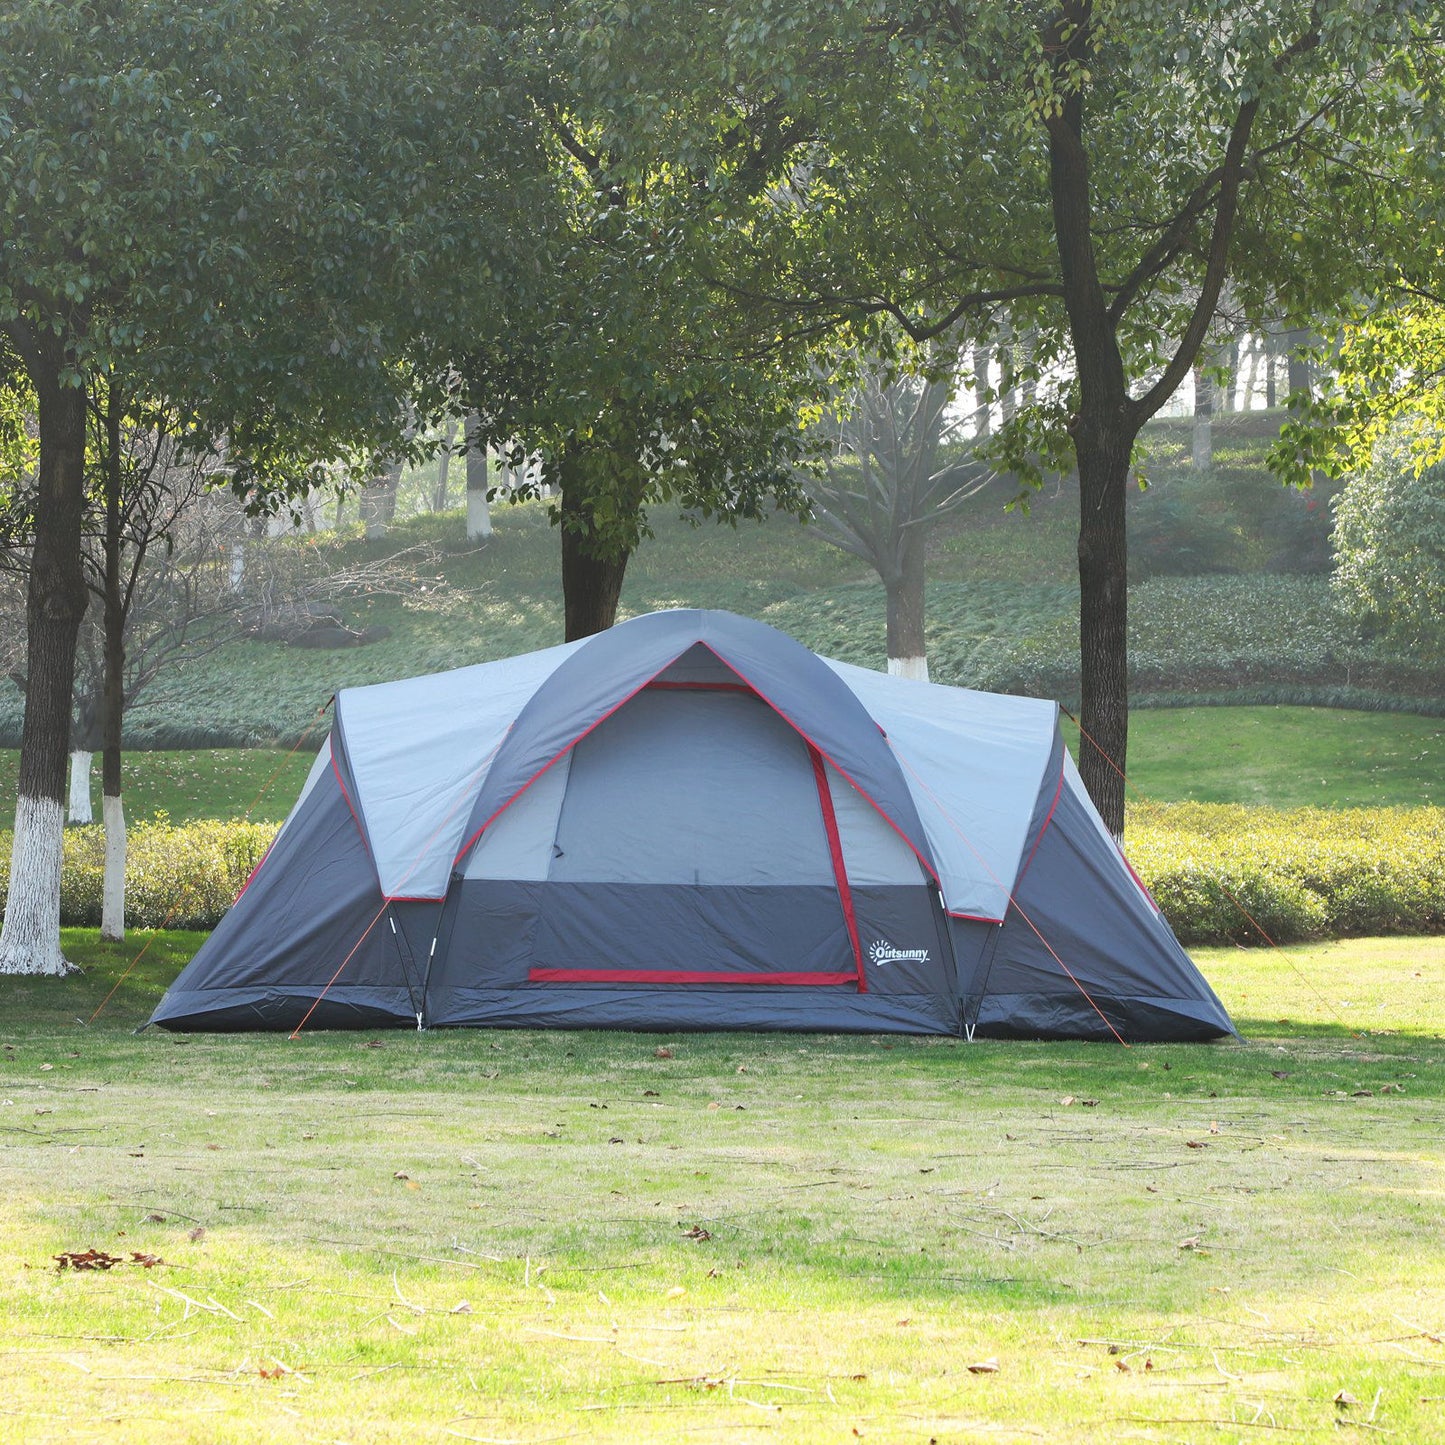 Nancy's Neustadt Camping Tent - Camping tent - Blue / Gray - 455 x 230 x 180 cm